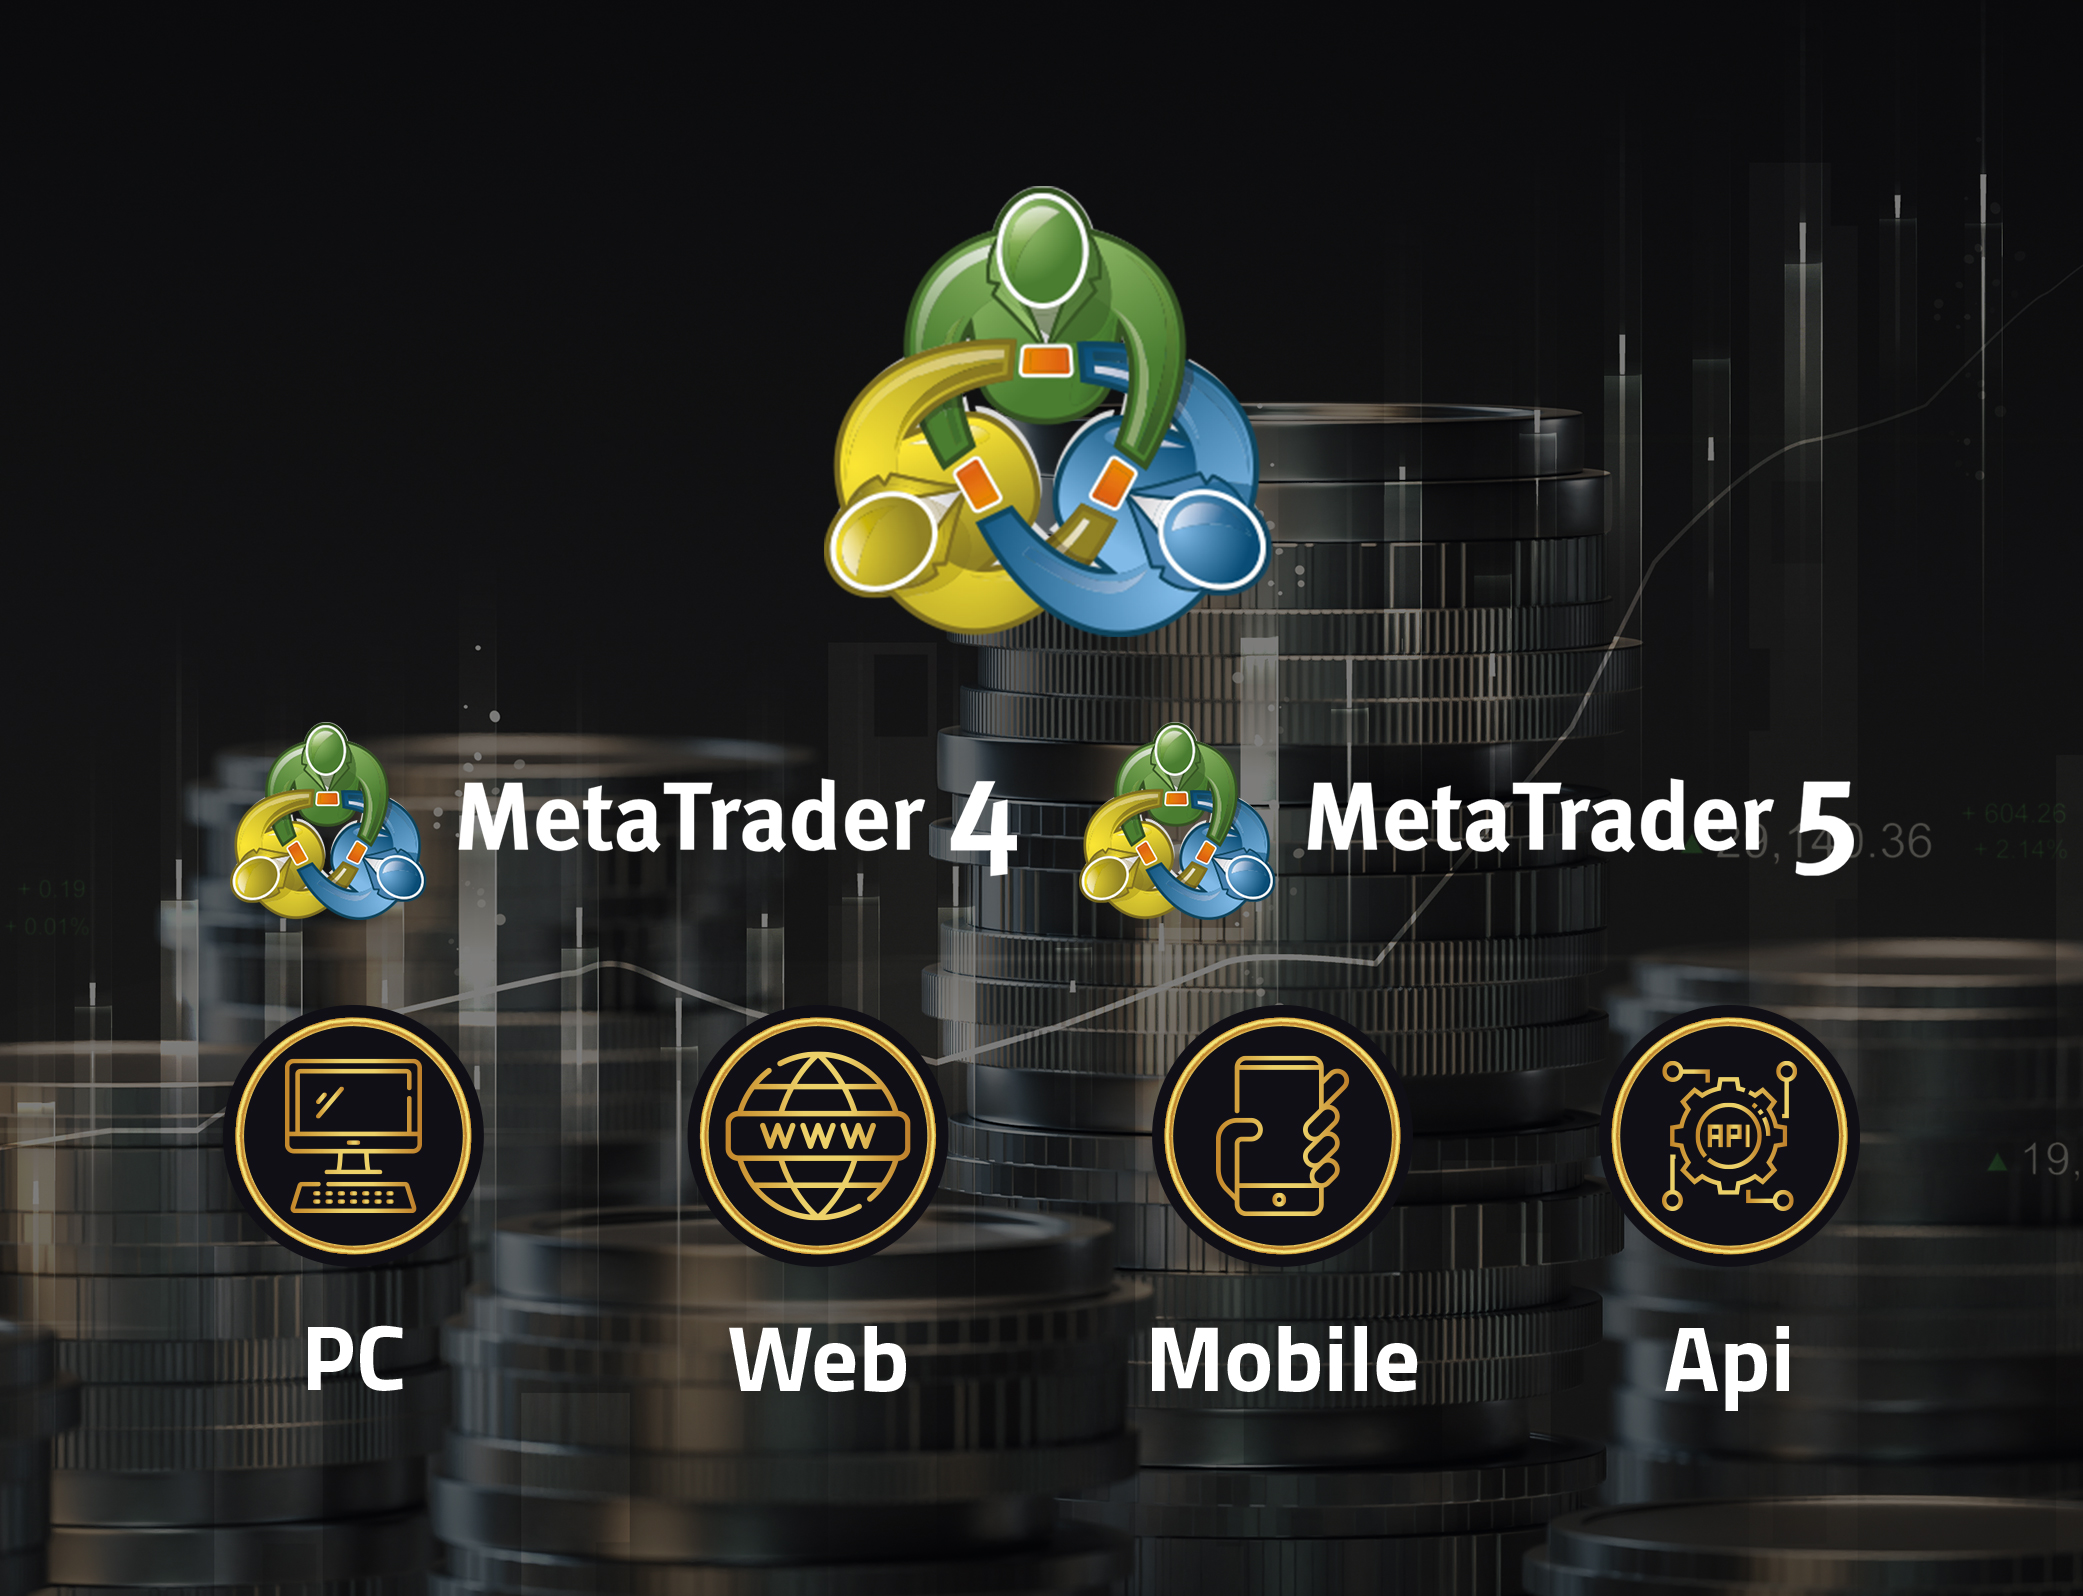 Trading Platform